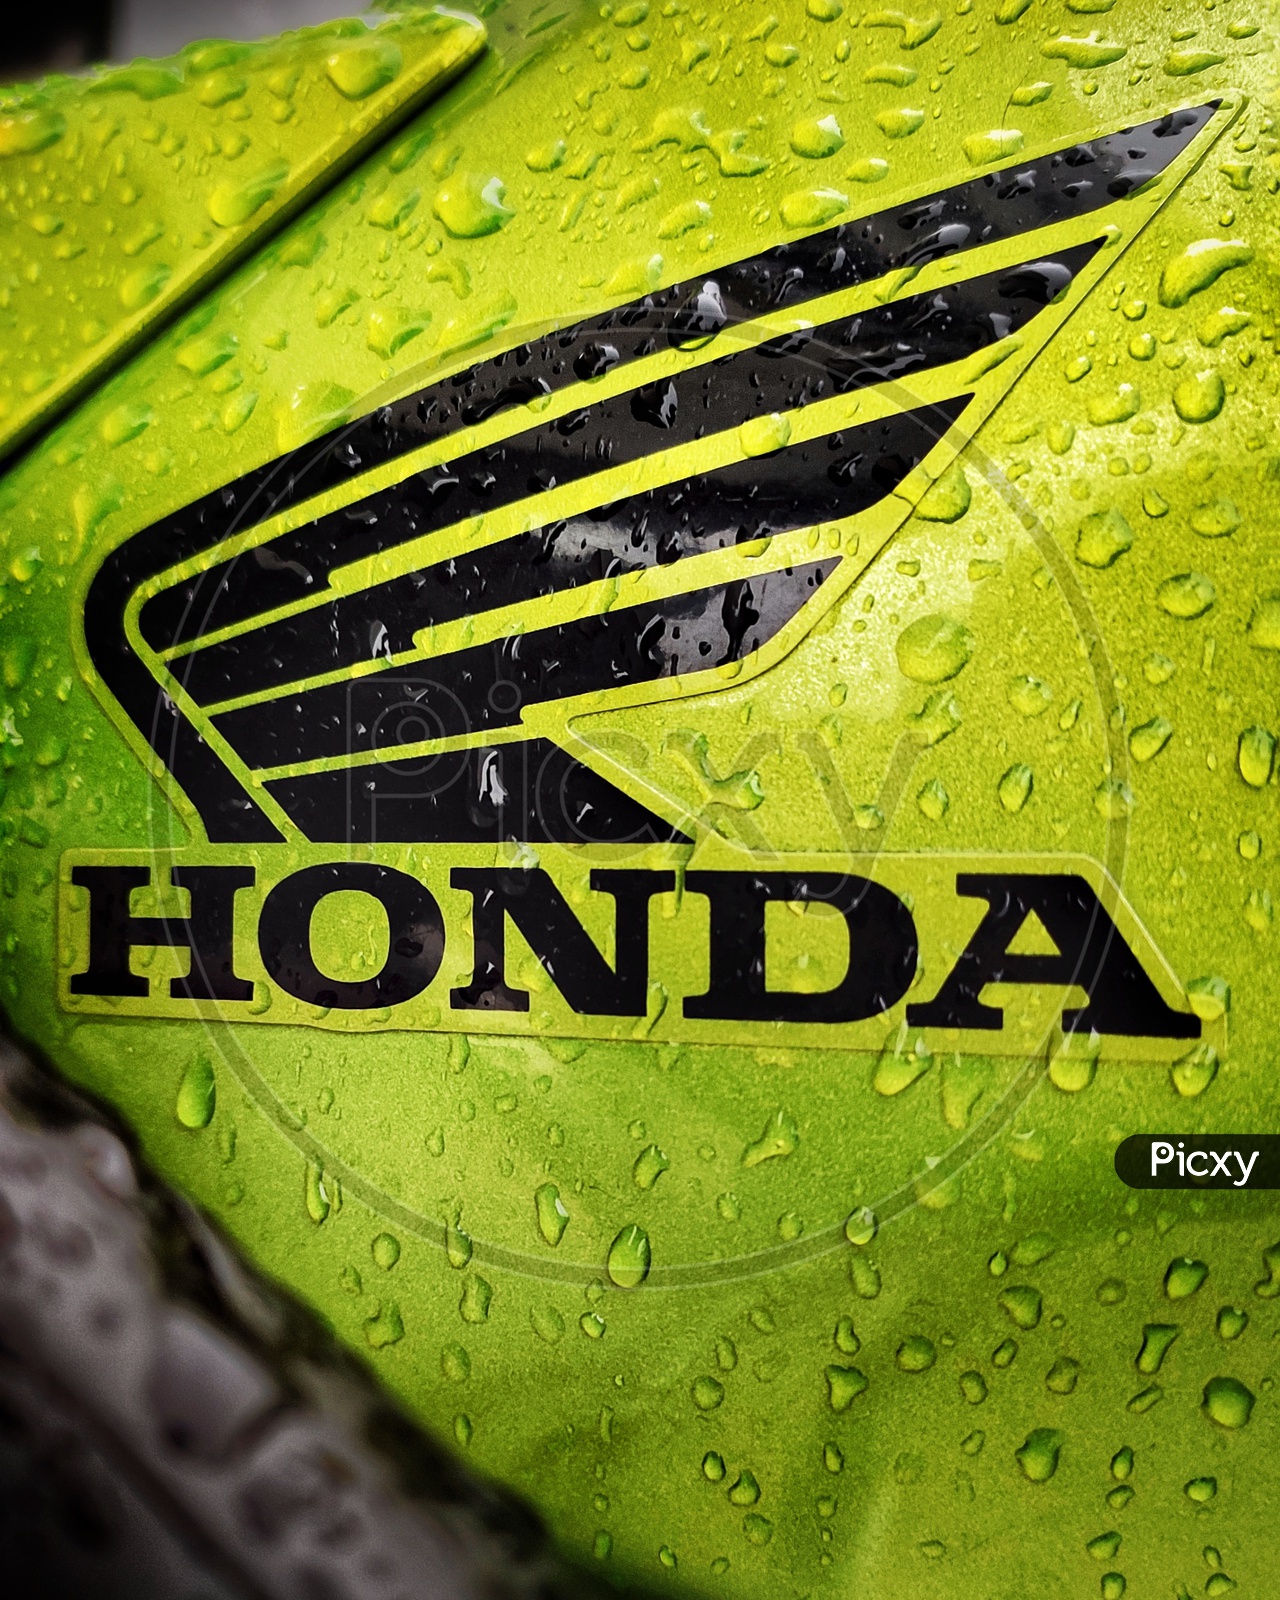 Honda bikes